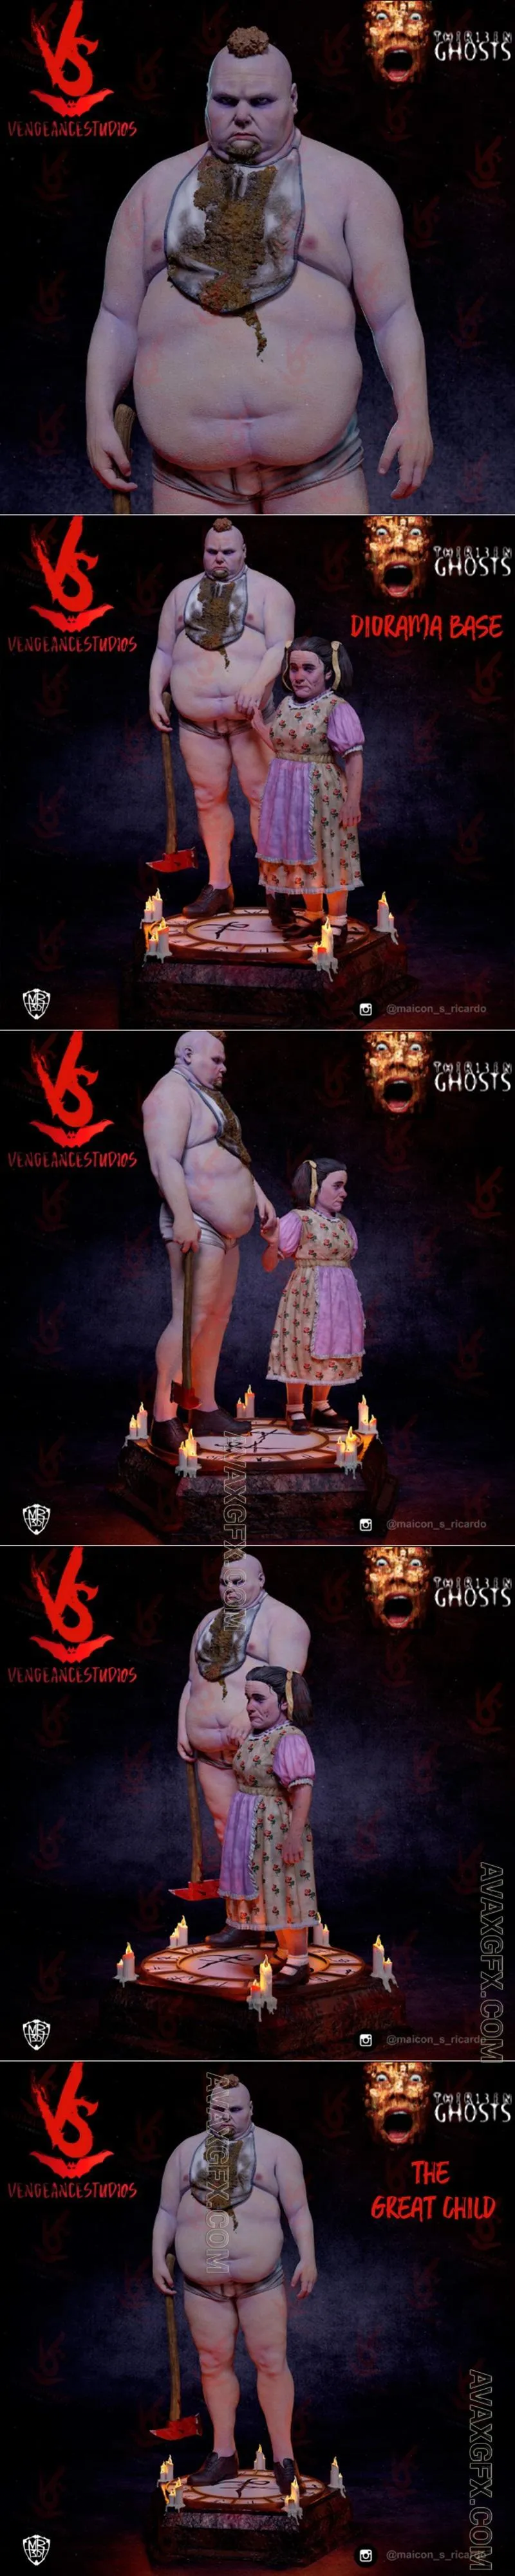 Vengeancestudios - The Great Child 13 Ghosts - STL 3D Model